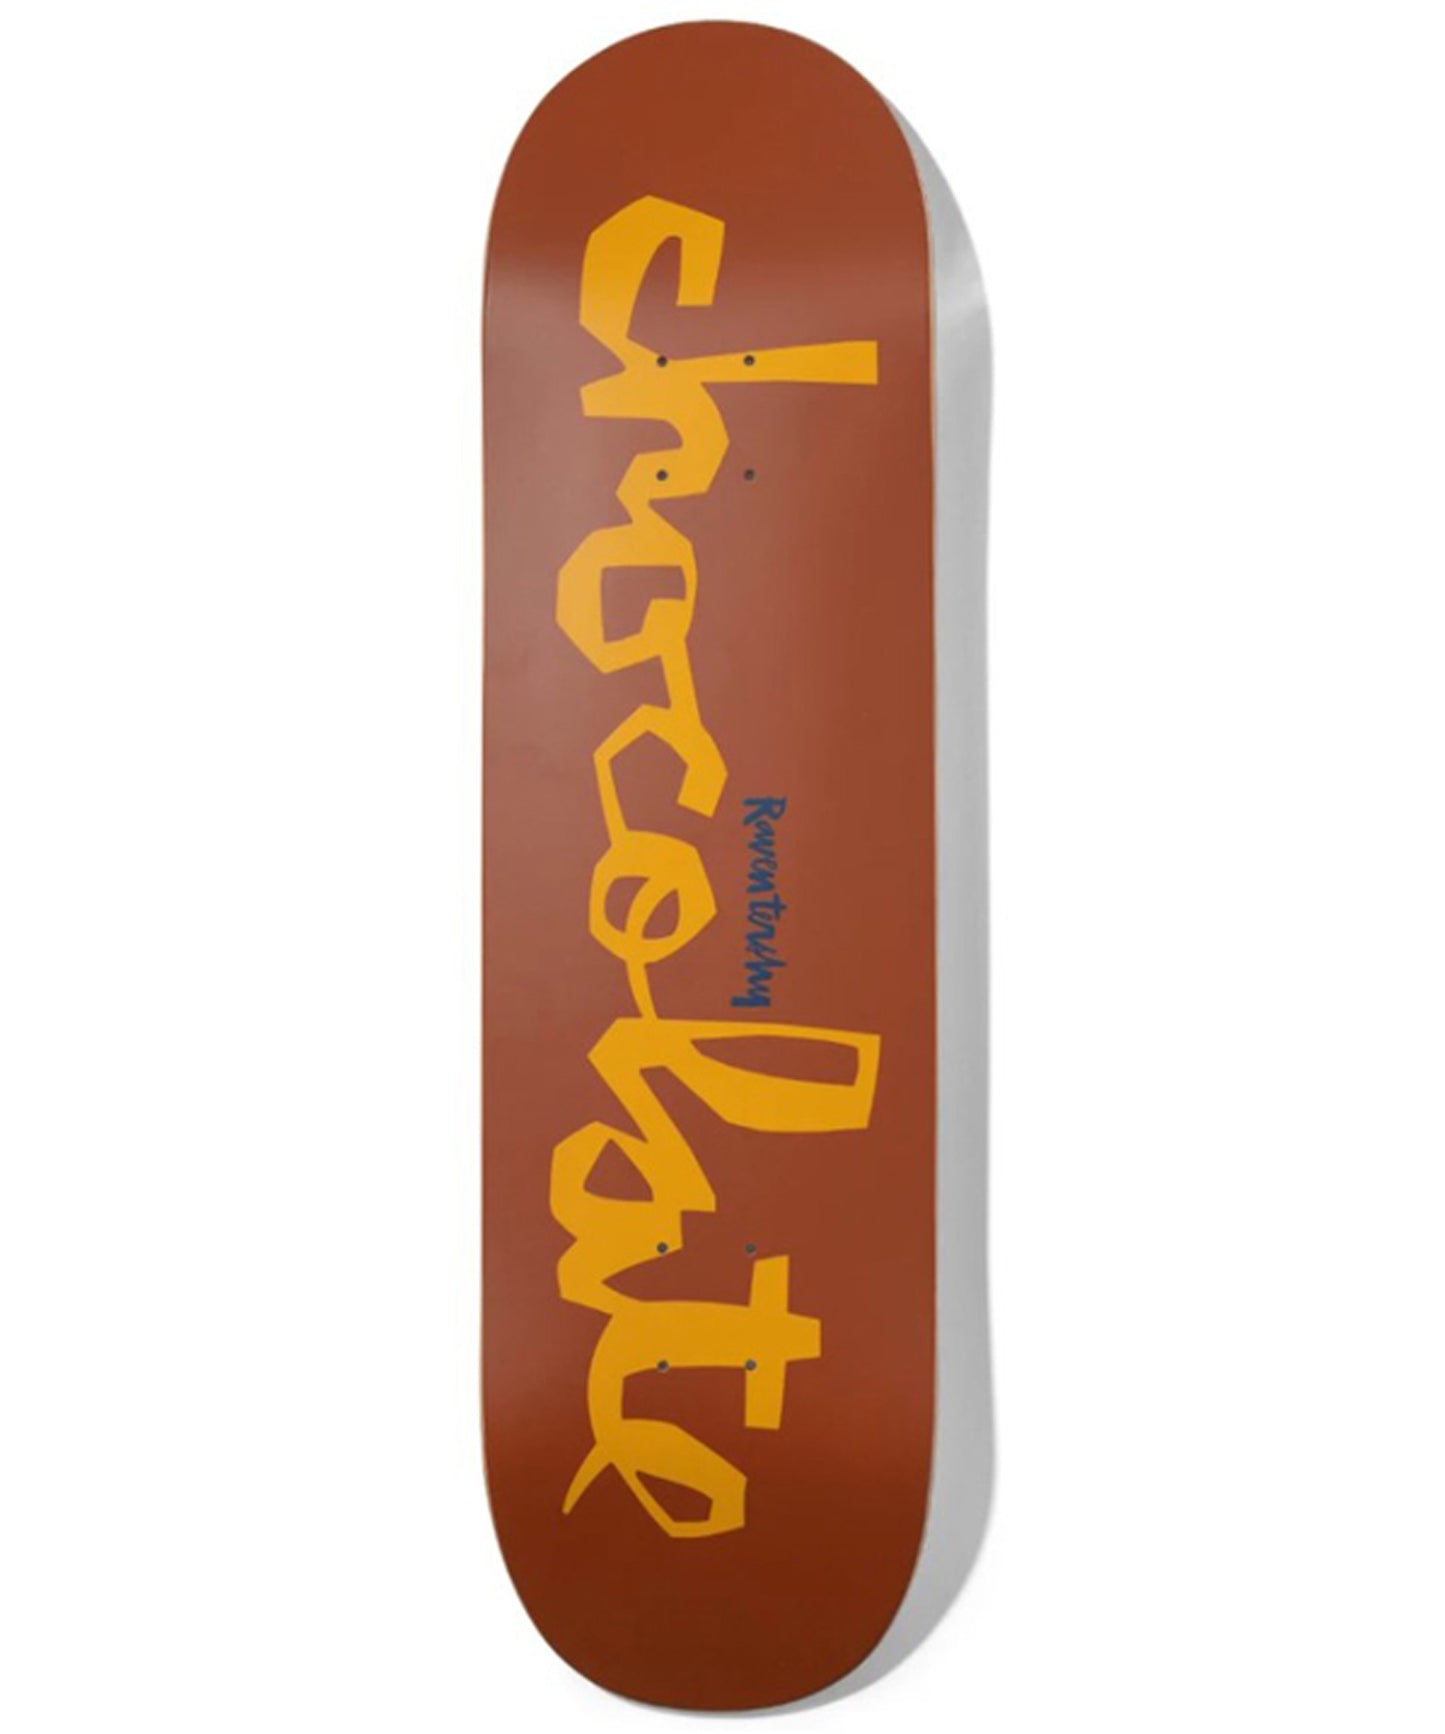 Tabla de Skate Chocolate Alvarez car club 7 laminas de arce en un modelo pro de Rawen Tershy